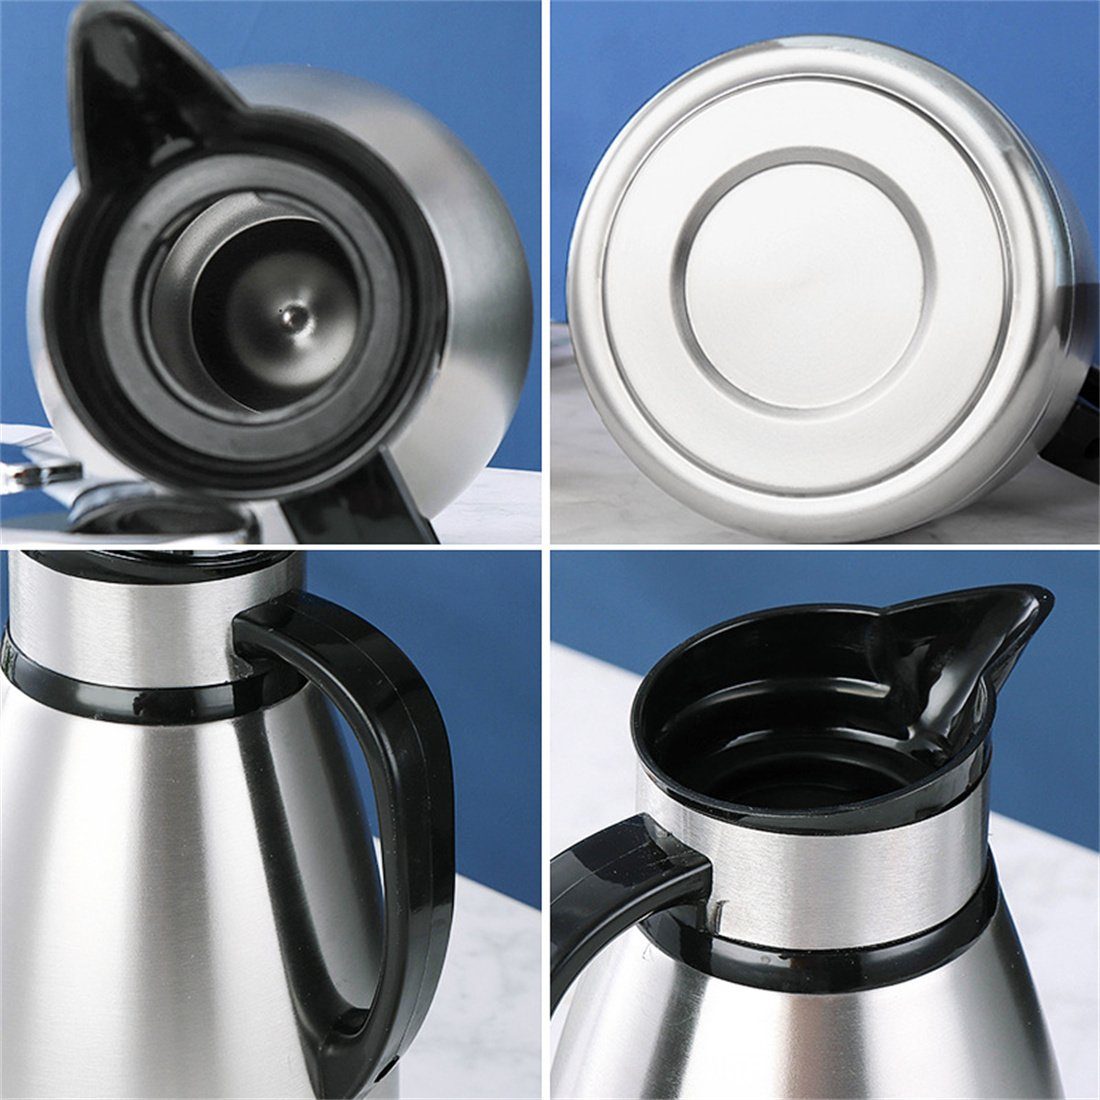 Kaffeemaschine, Isolierkanne B DÖRÖY Edelstahl, Vakuum-Wasserkocher, l Thermoskanne aus 2.0